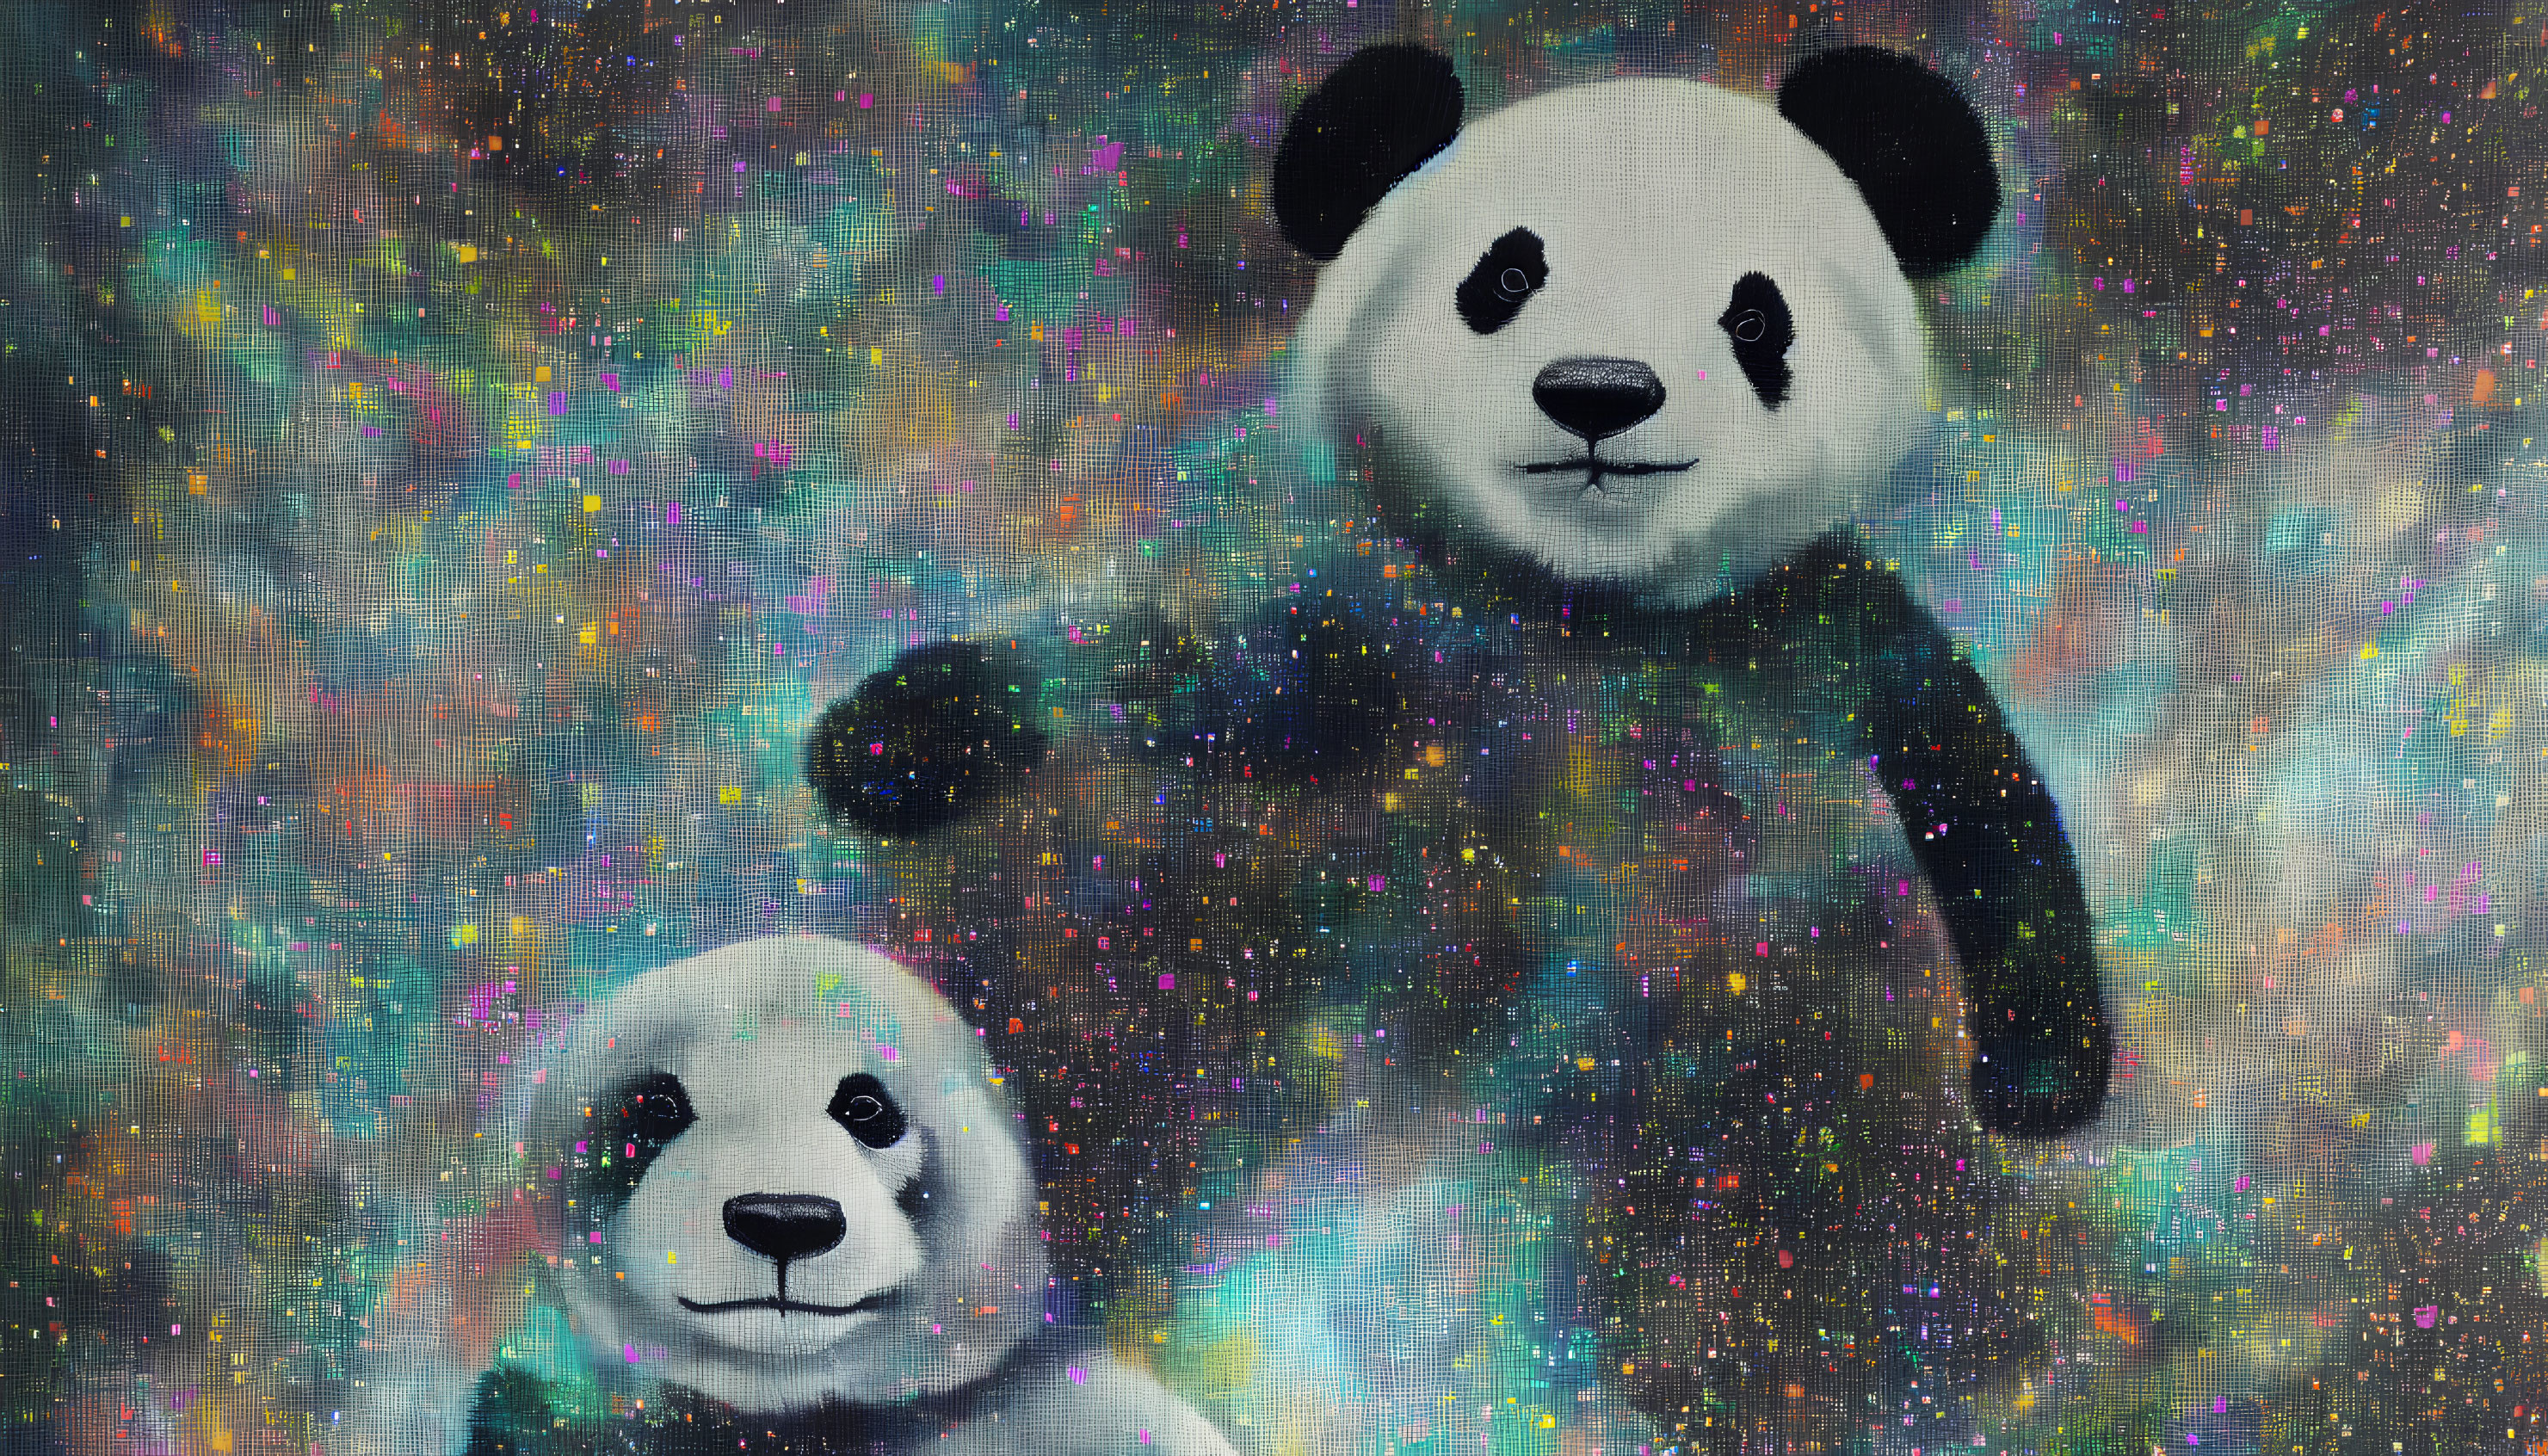 Two panda bears in vibrant cosmic setting